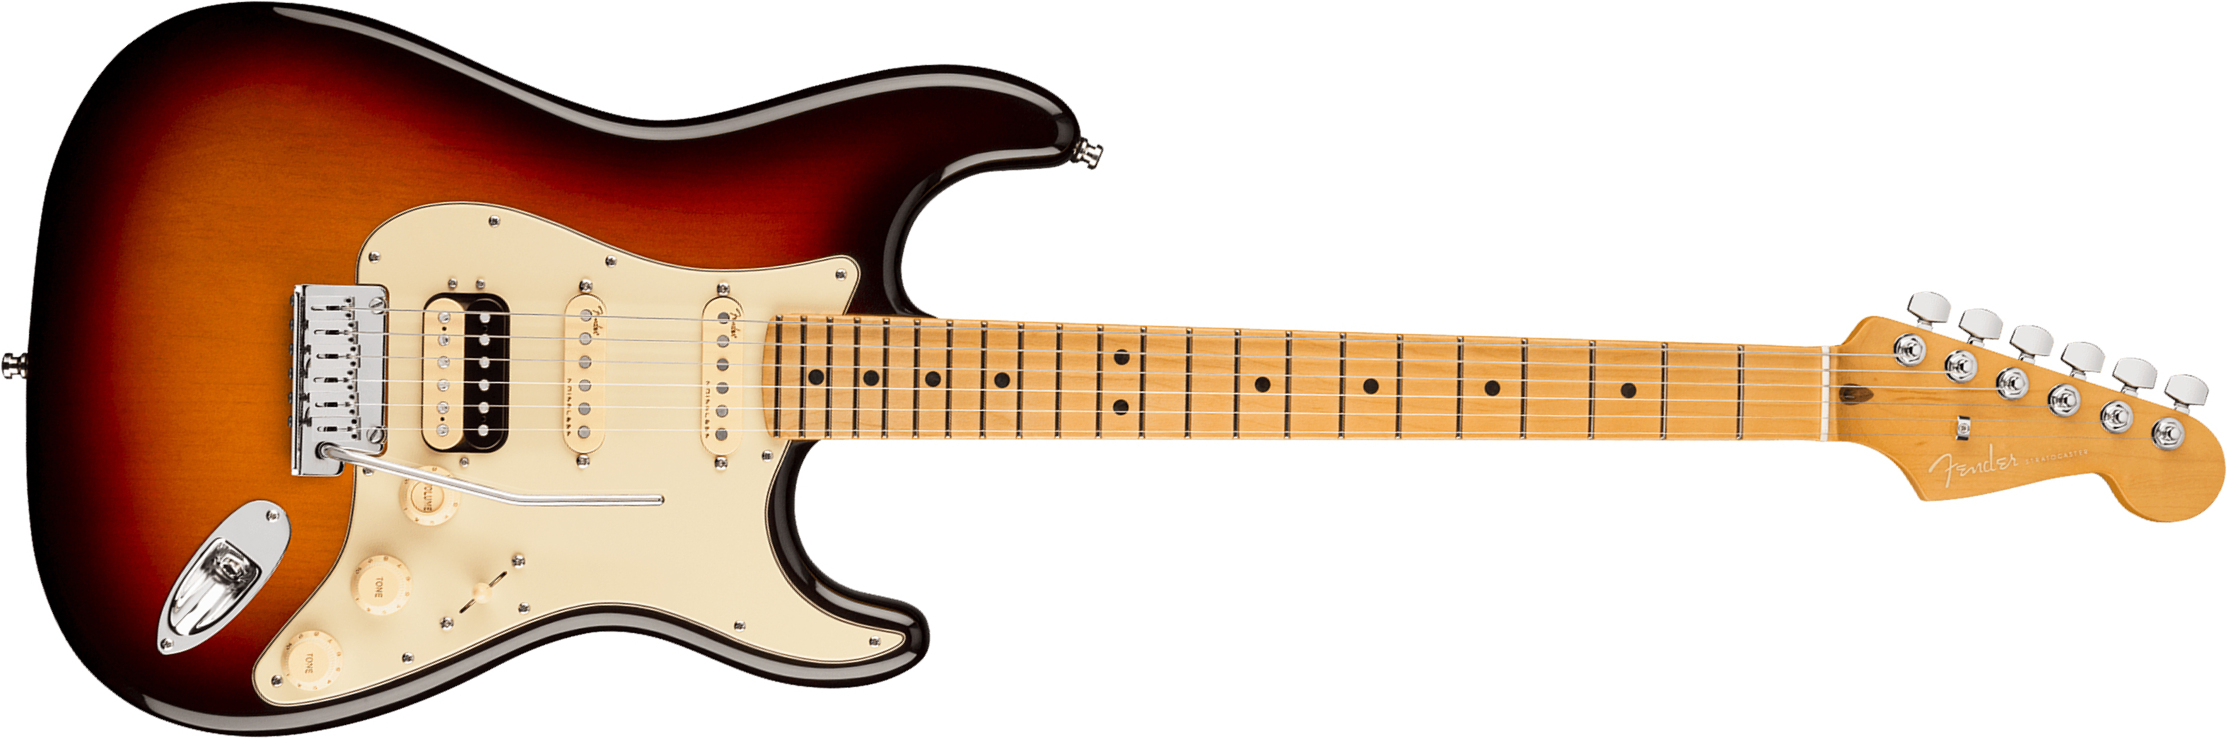 Fender Strat American Ultra Hss 2019 Usa Mn - Ultraburst - E-Gitarre in Str-Form - Main picture